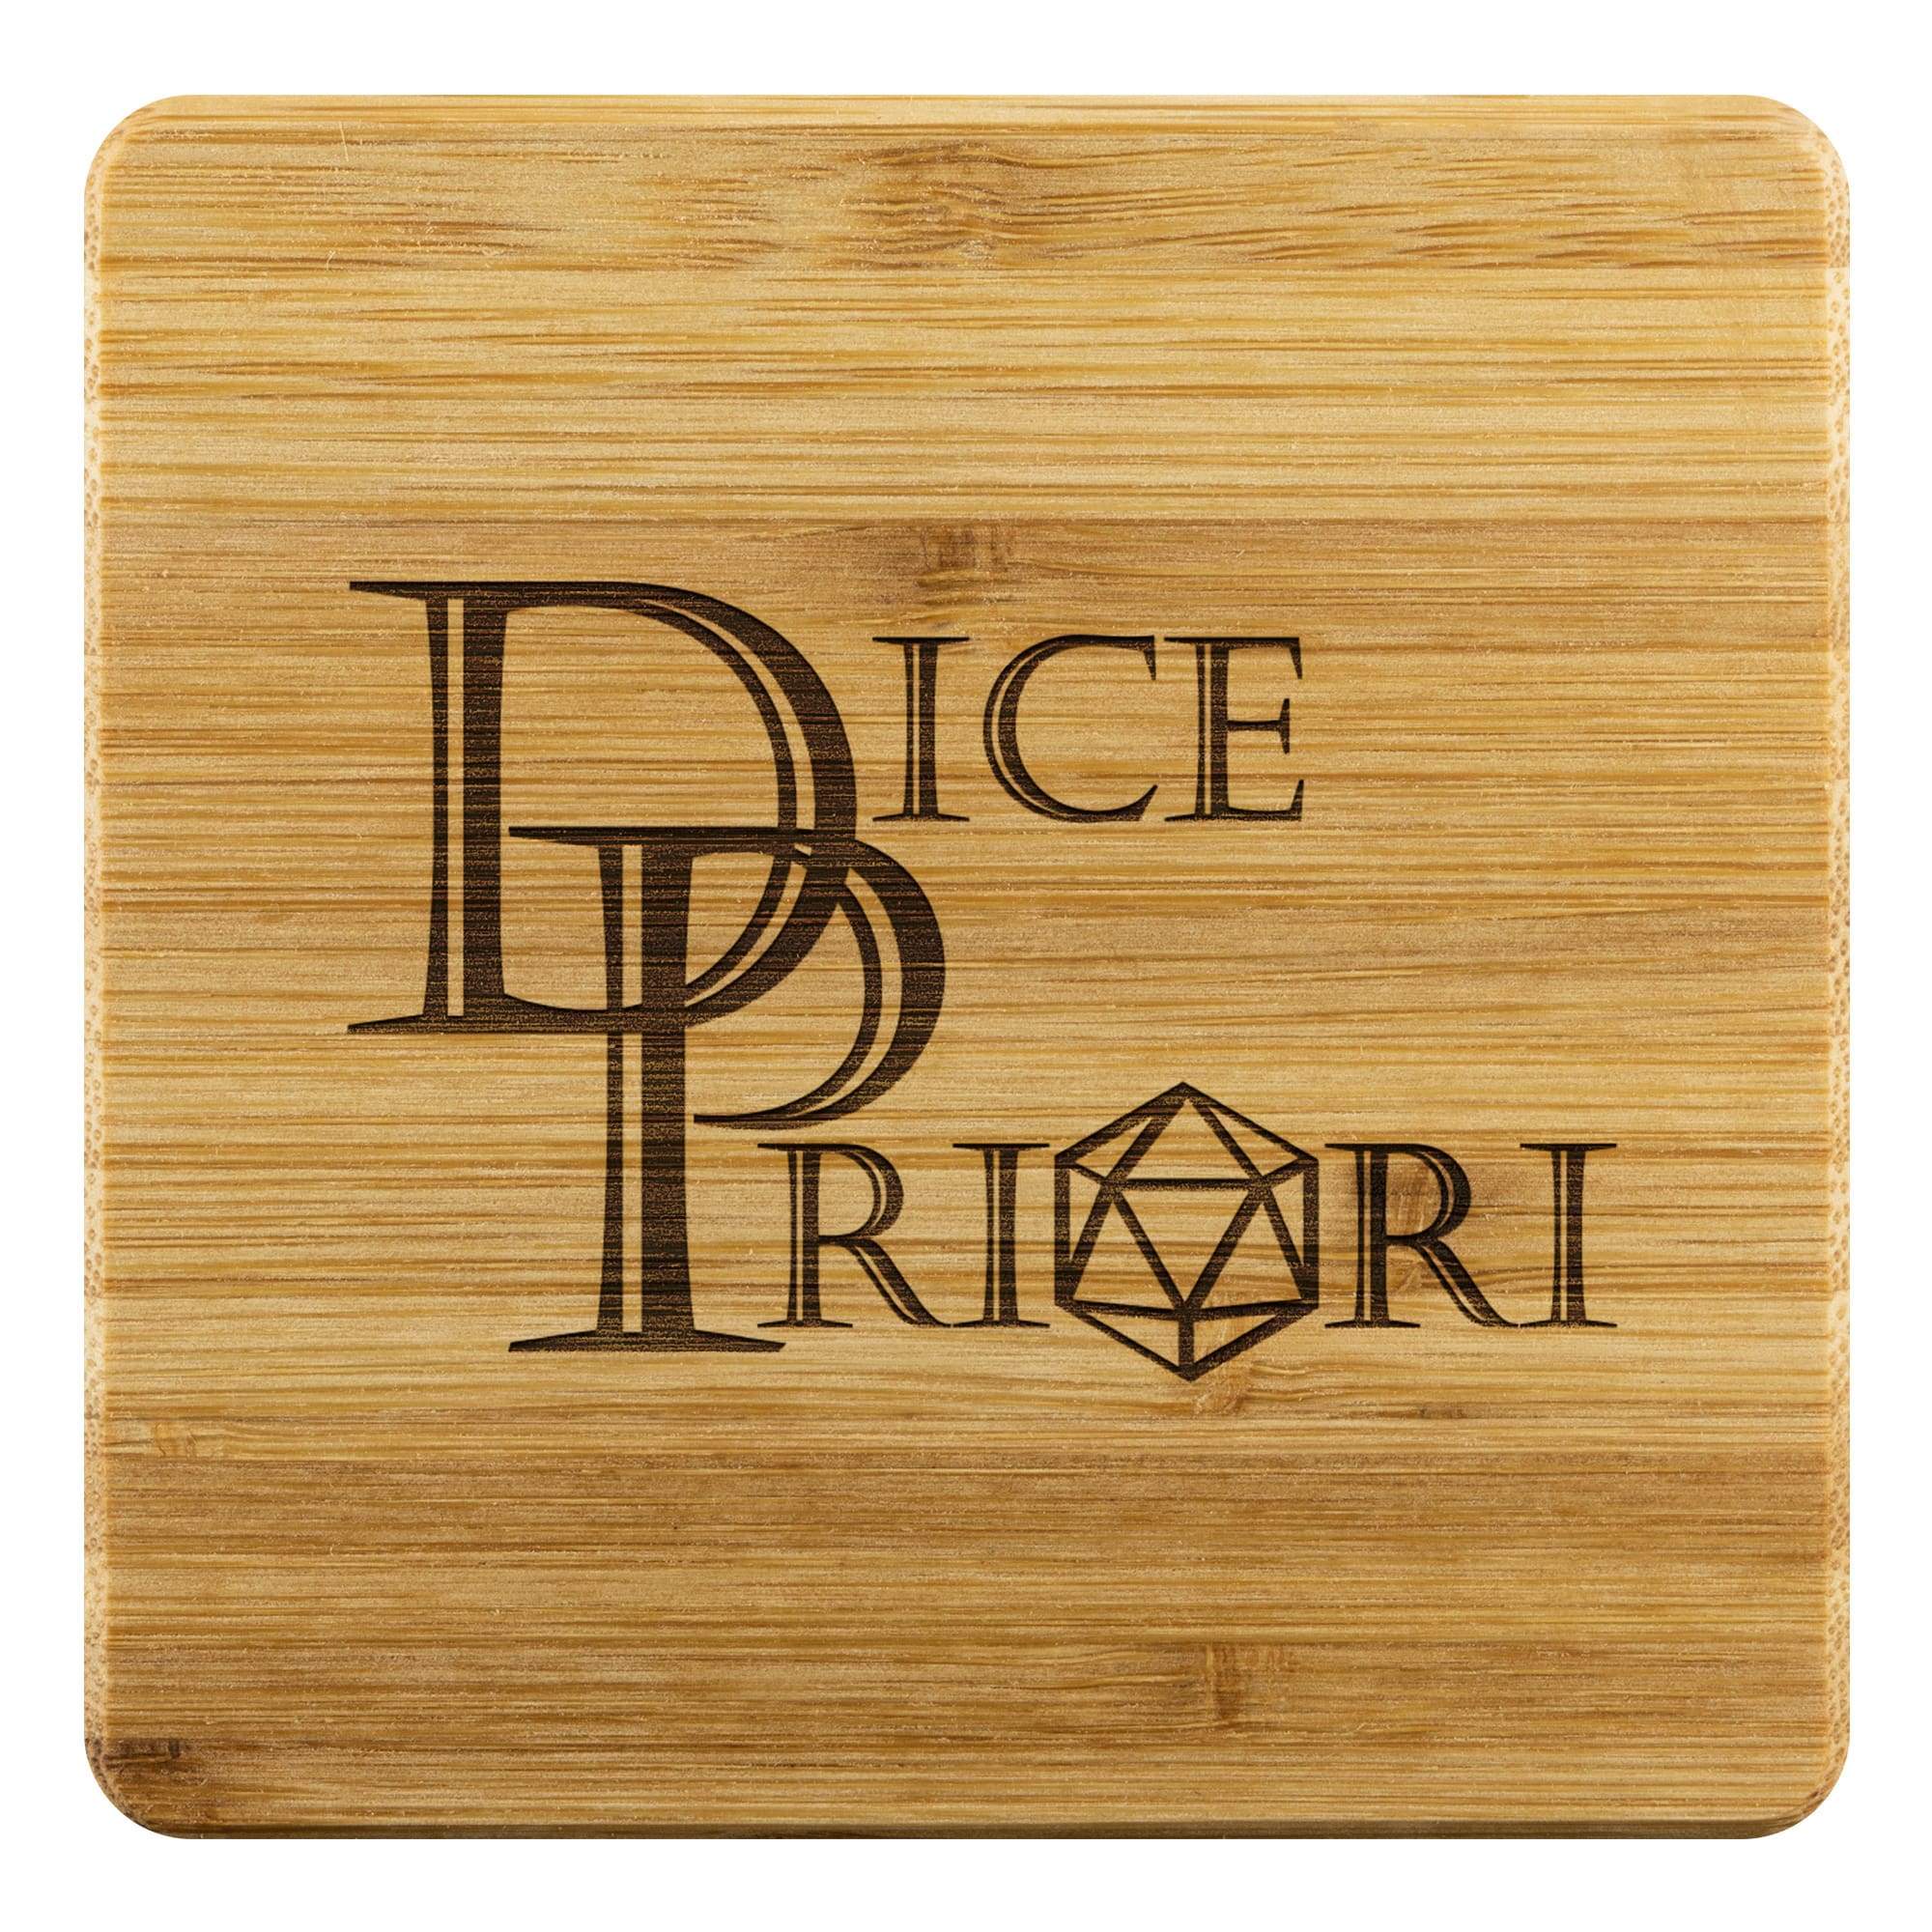 Dice Priori Classic Text Logo Bamboo Coasters (Set of 4) - Bamboo Coaster - 4pc - Coasters